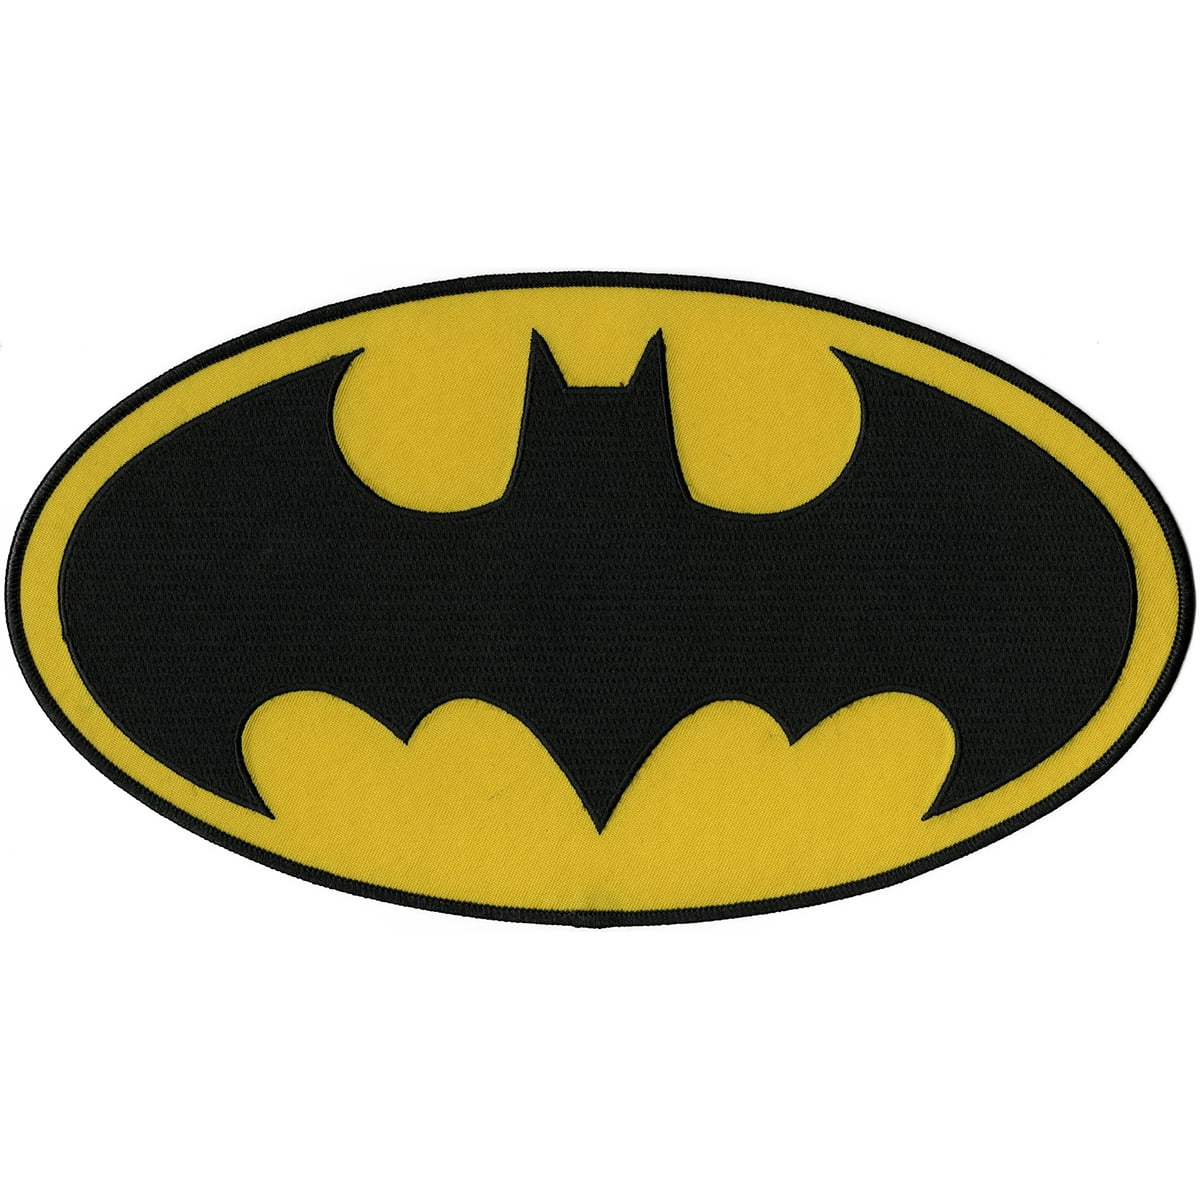 Iron On Patch Embroidered Badge Kids Cartoon Superhero Action Batman Logo 